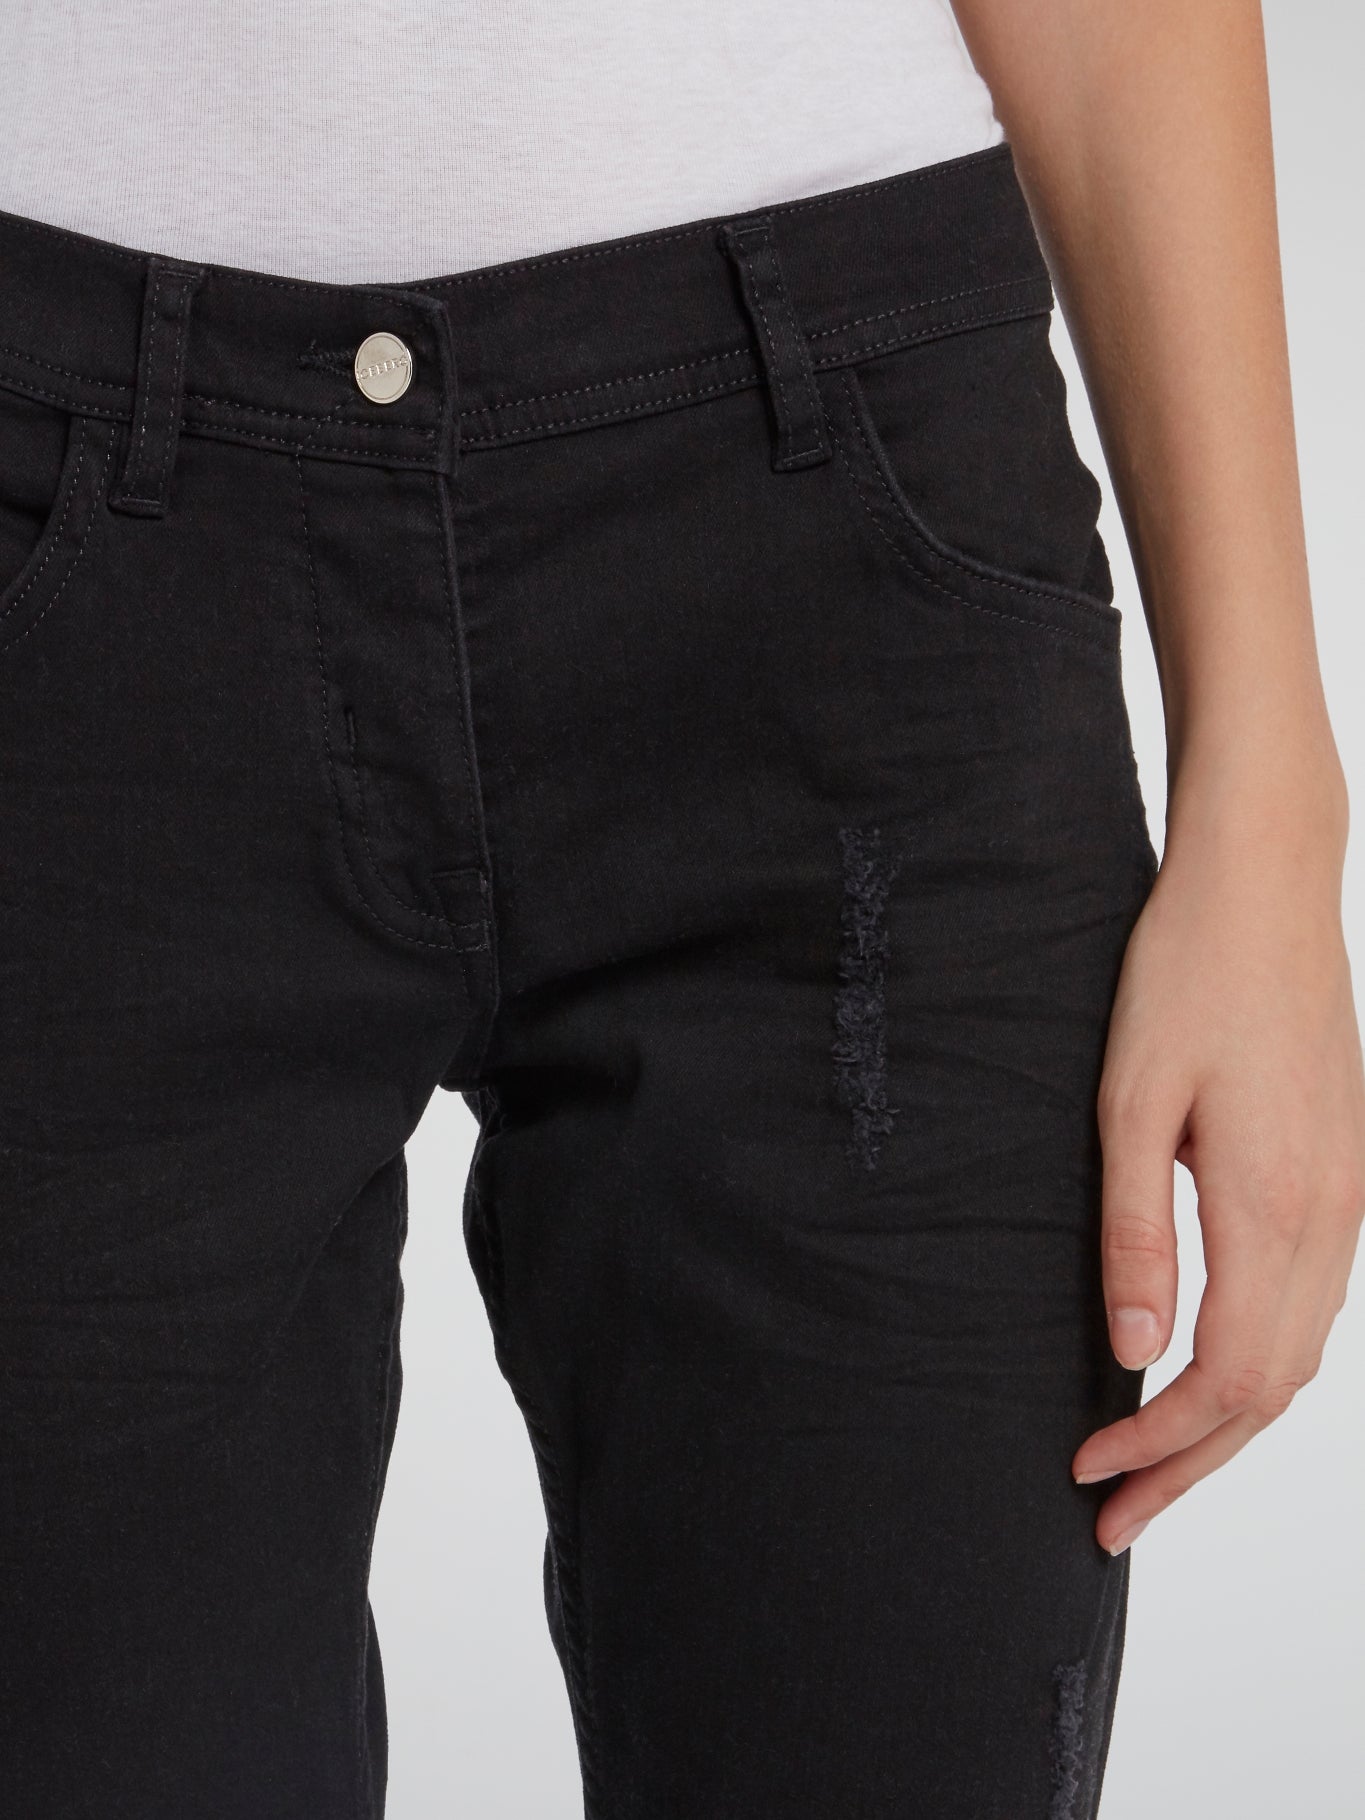 Black Distressed Capri Jeans